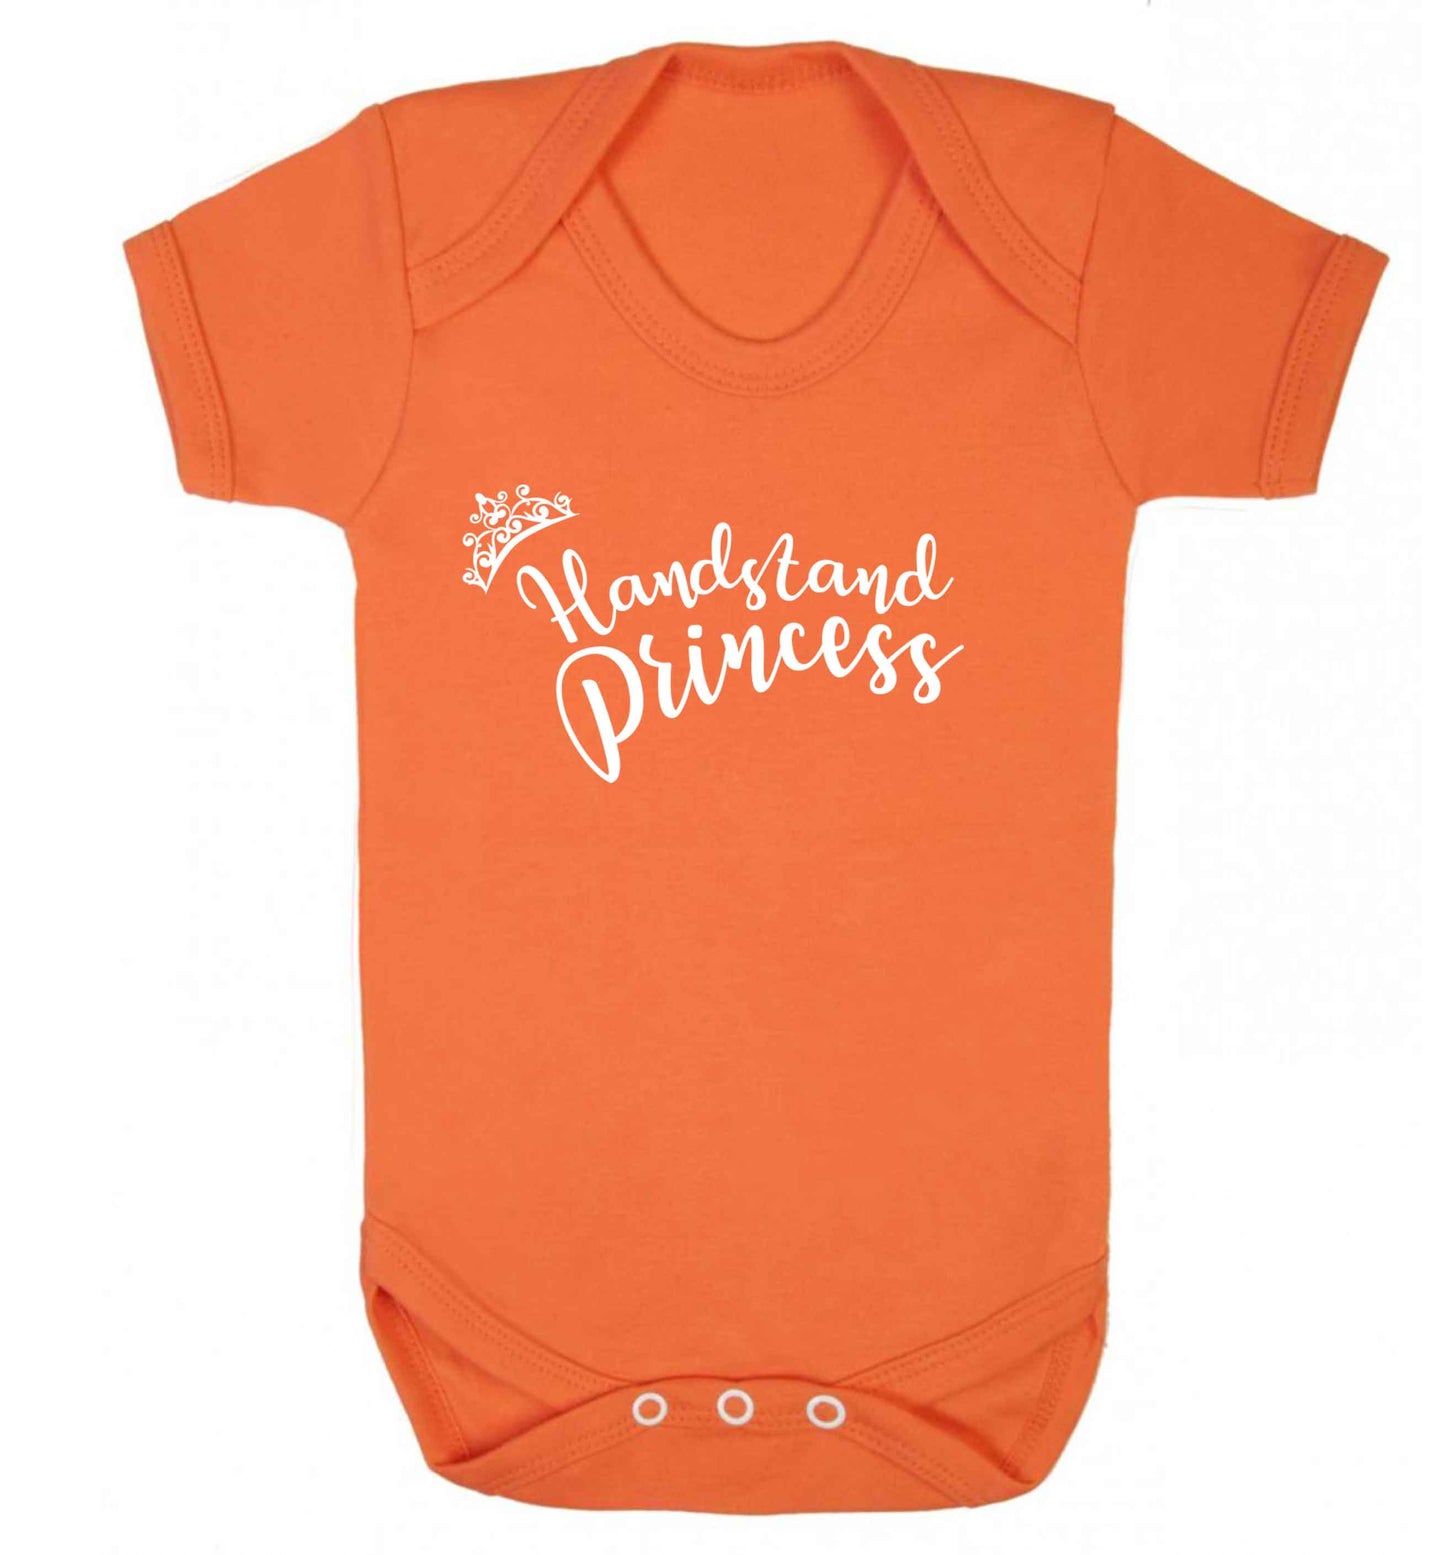 Handstand princess Baby Vest orange 18-24 months